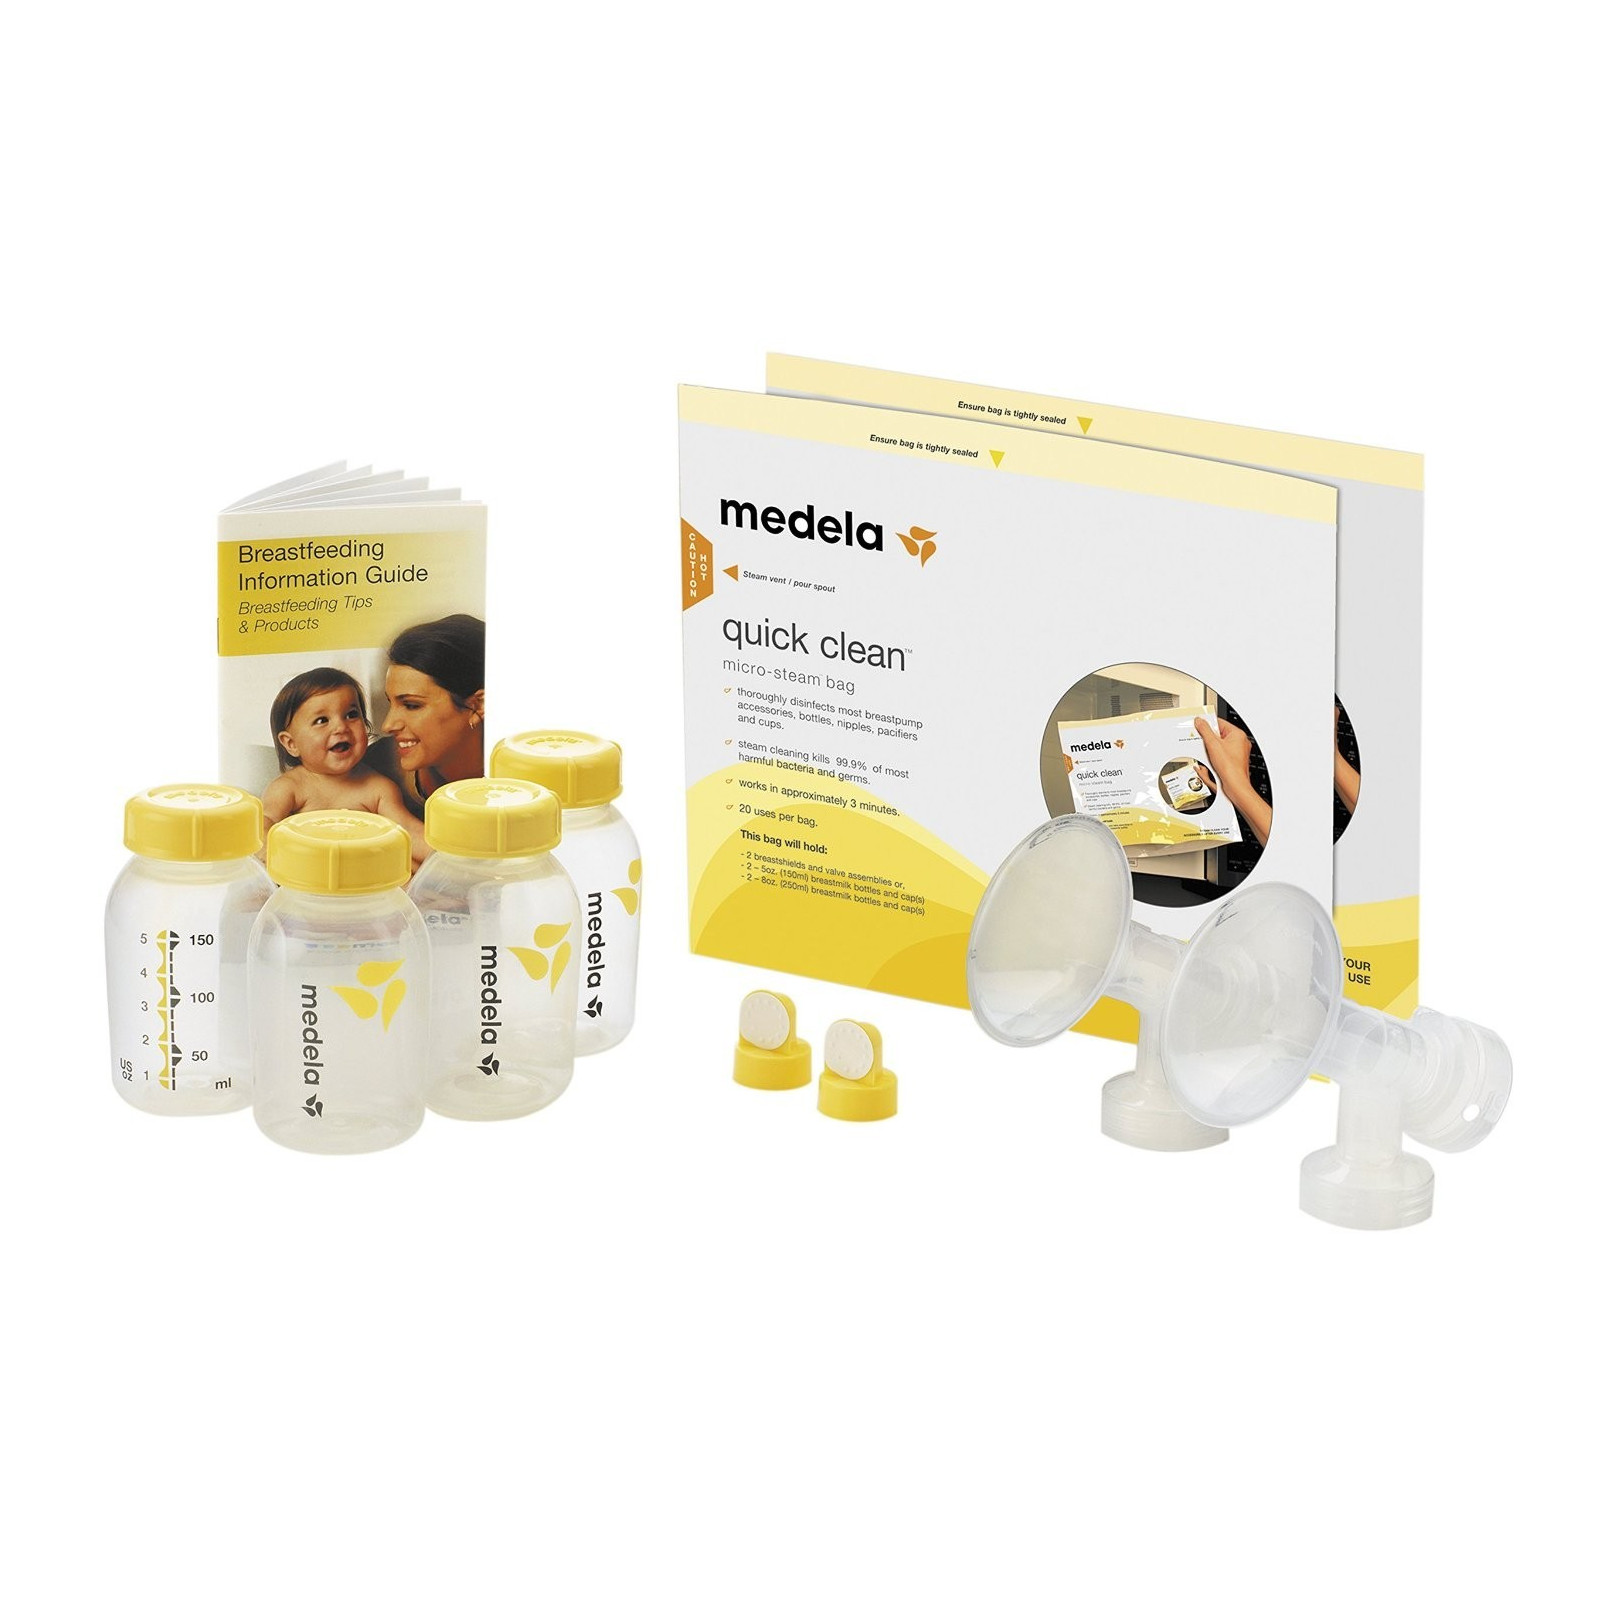 Medela - Disposable Nursing Pads(30 Pcs)